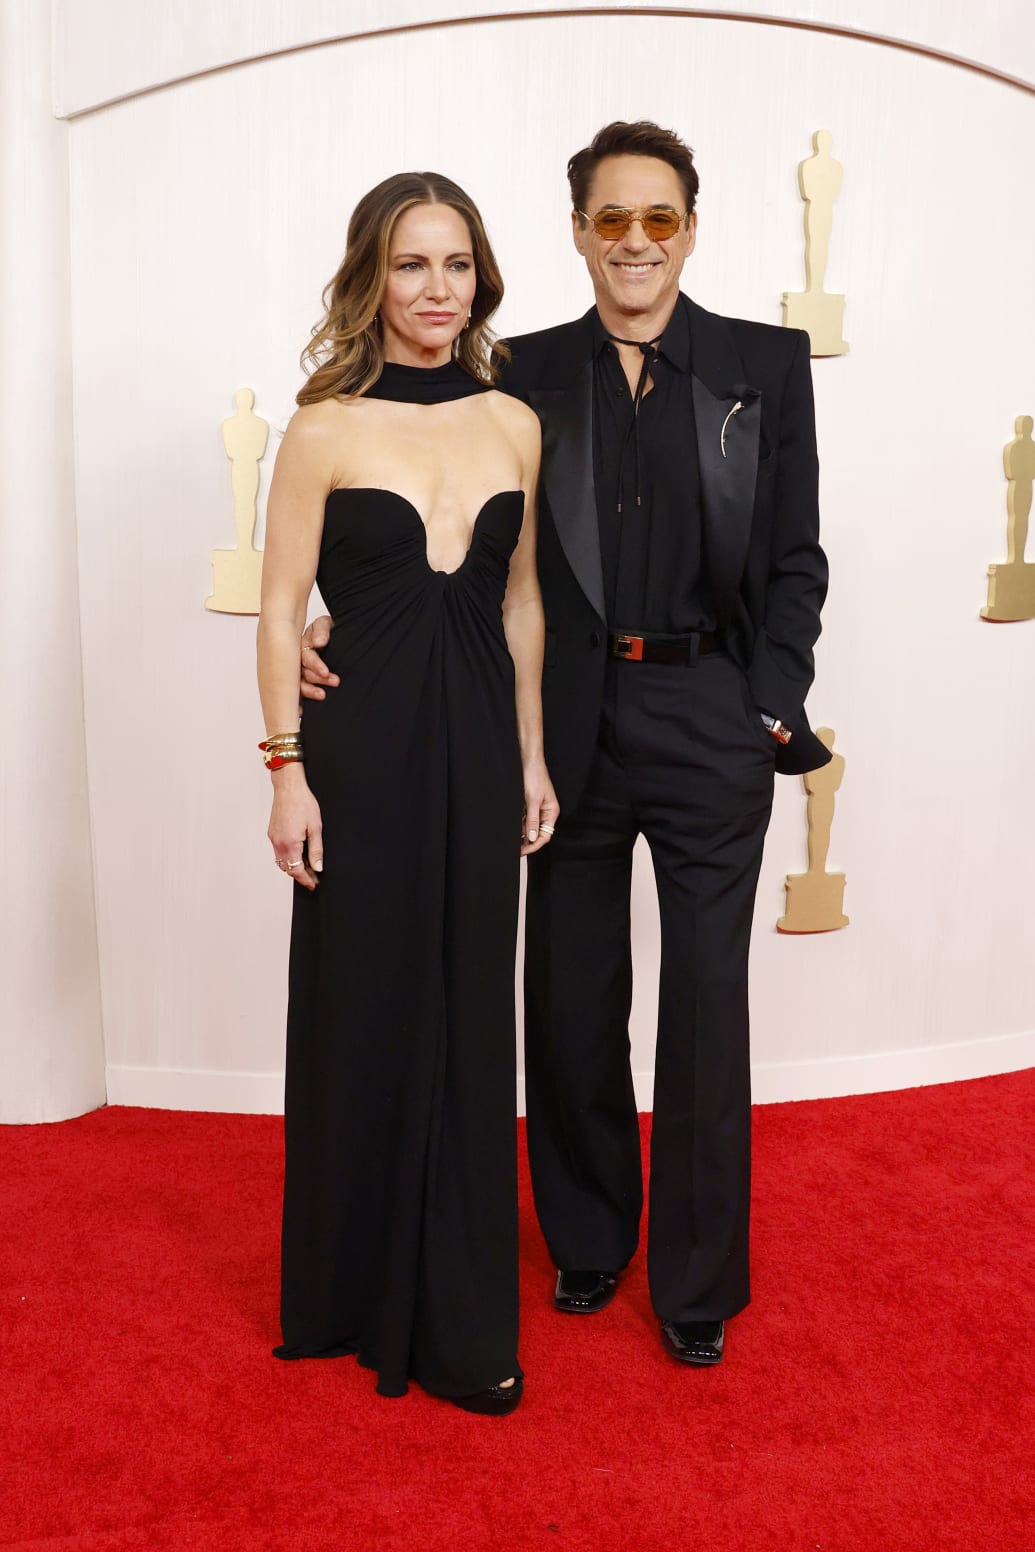 Susan Downey and Robert Downey Jr. at the Oscars 